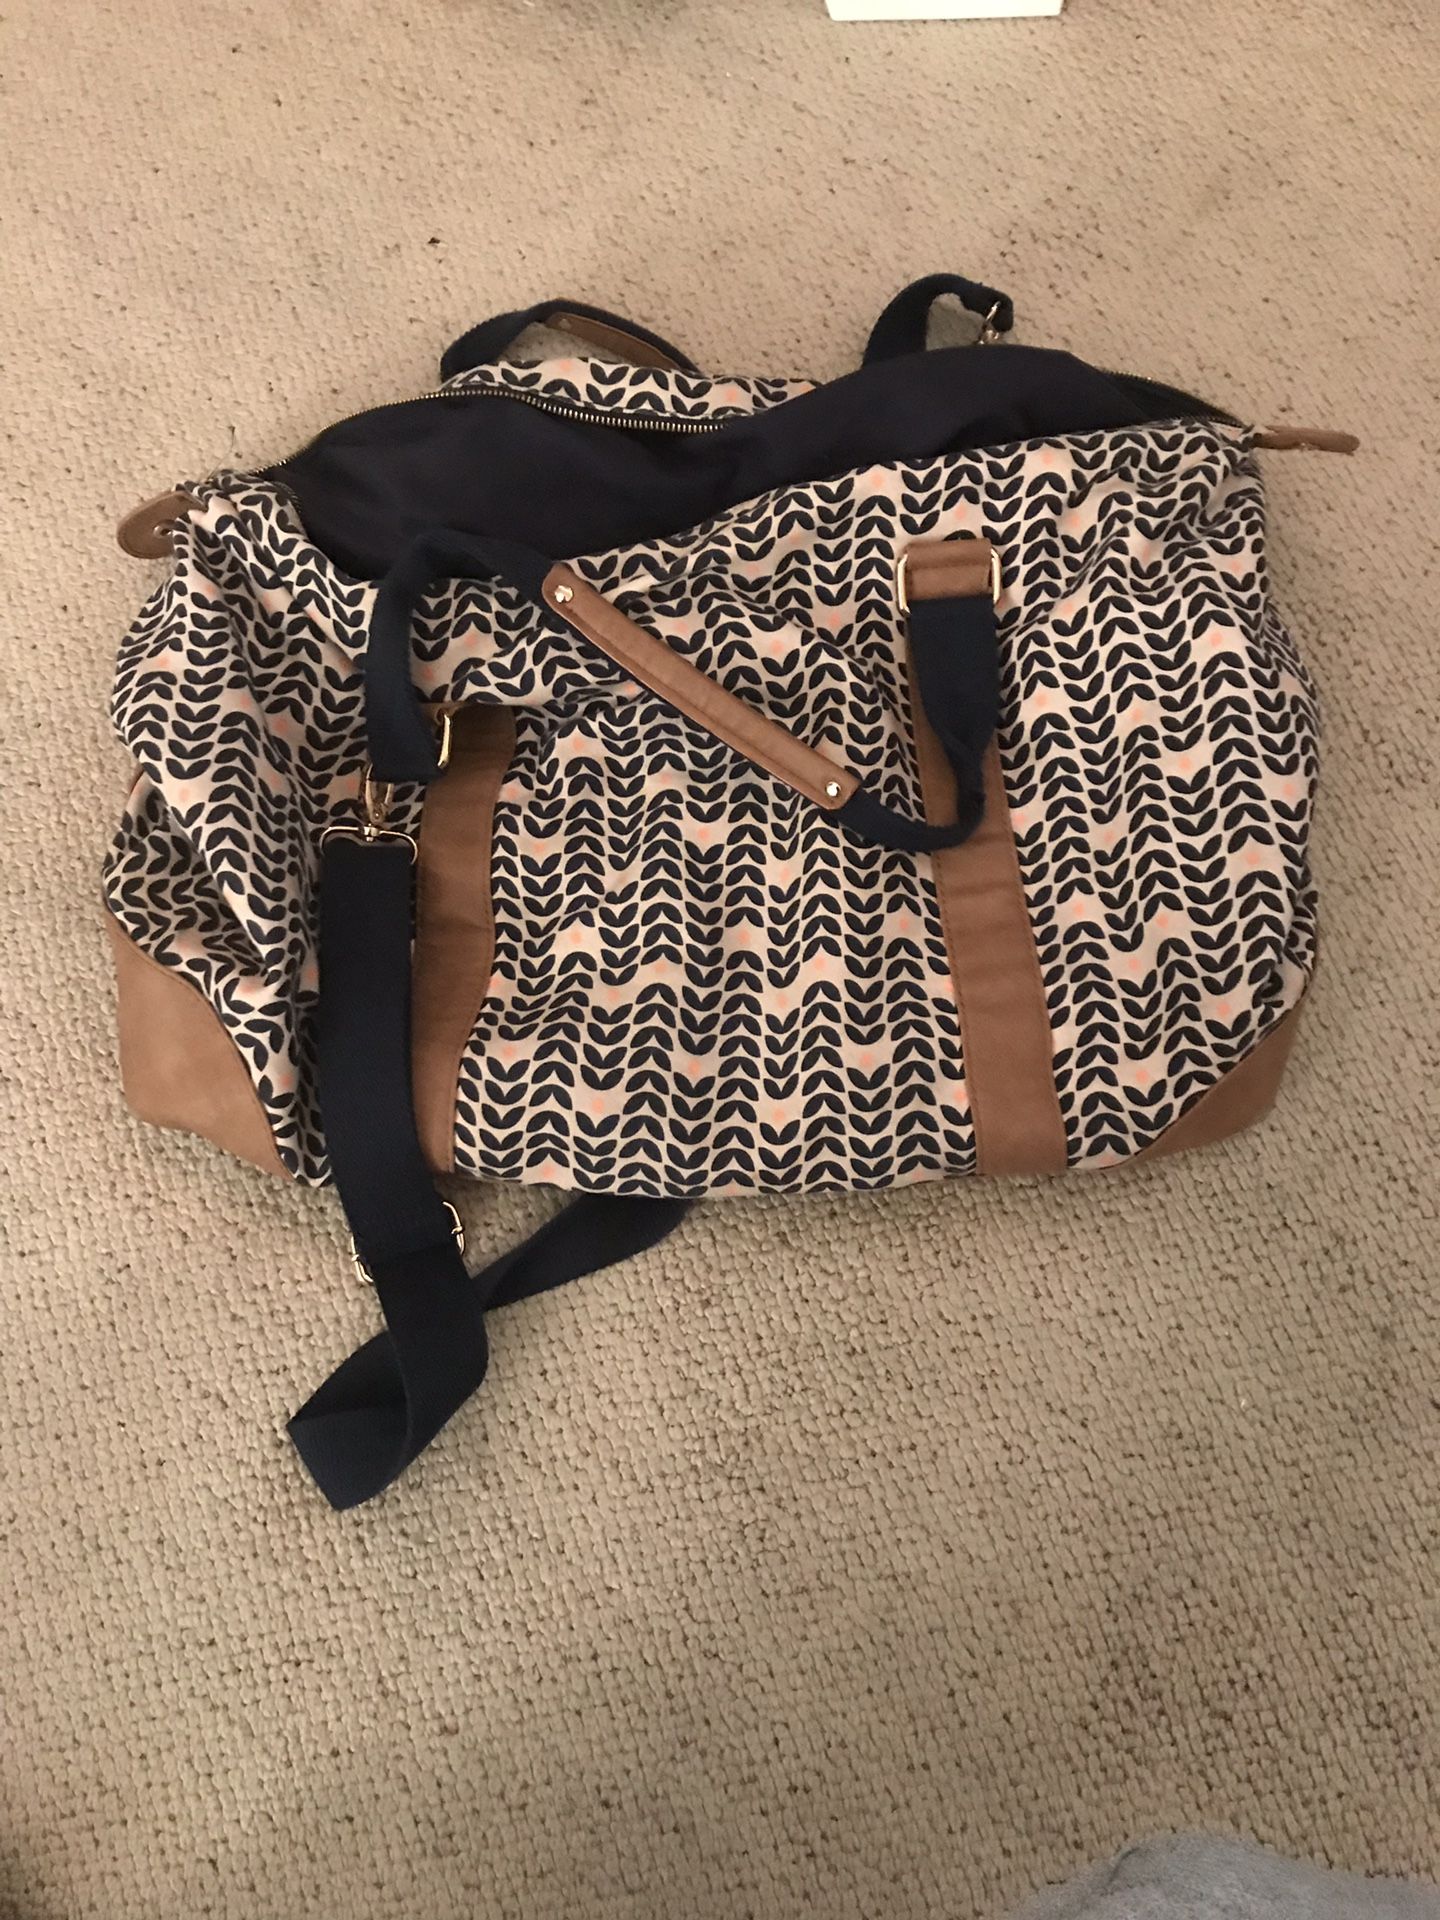 Medium sized duffel bag from Target